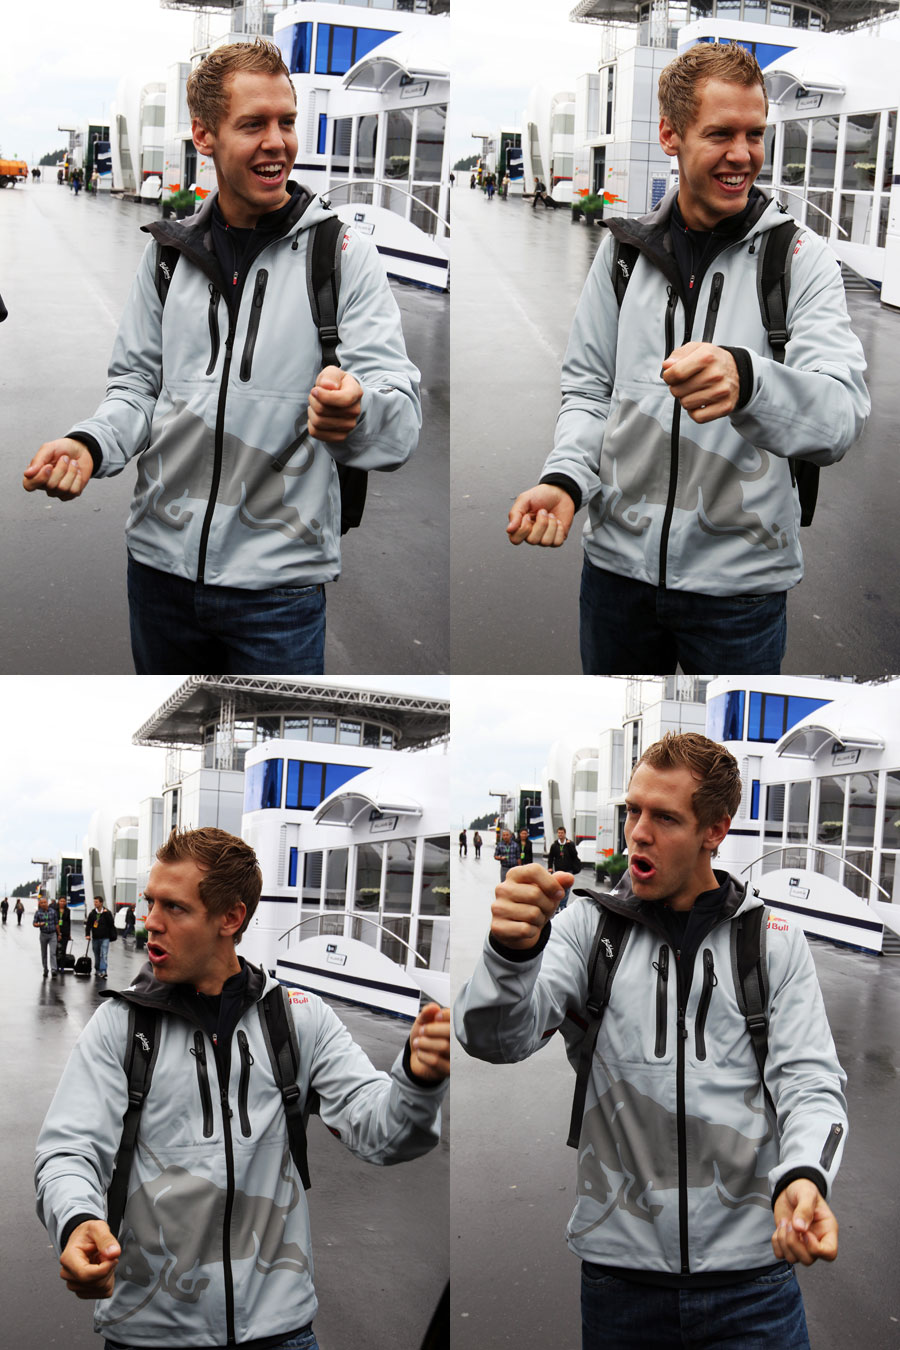 Sebastian Vettel jokes about the handling of the Top Gear car in the paddock on Thursday morning